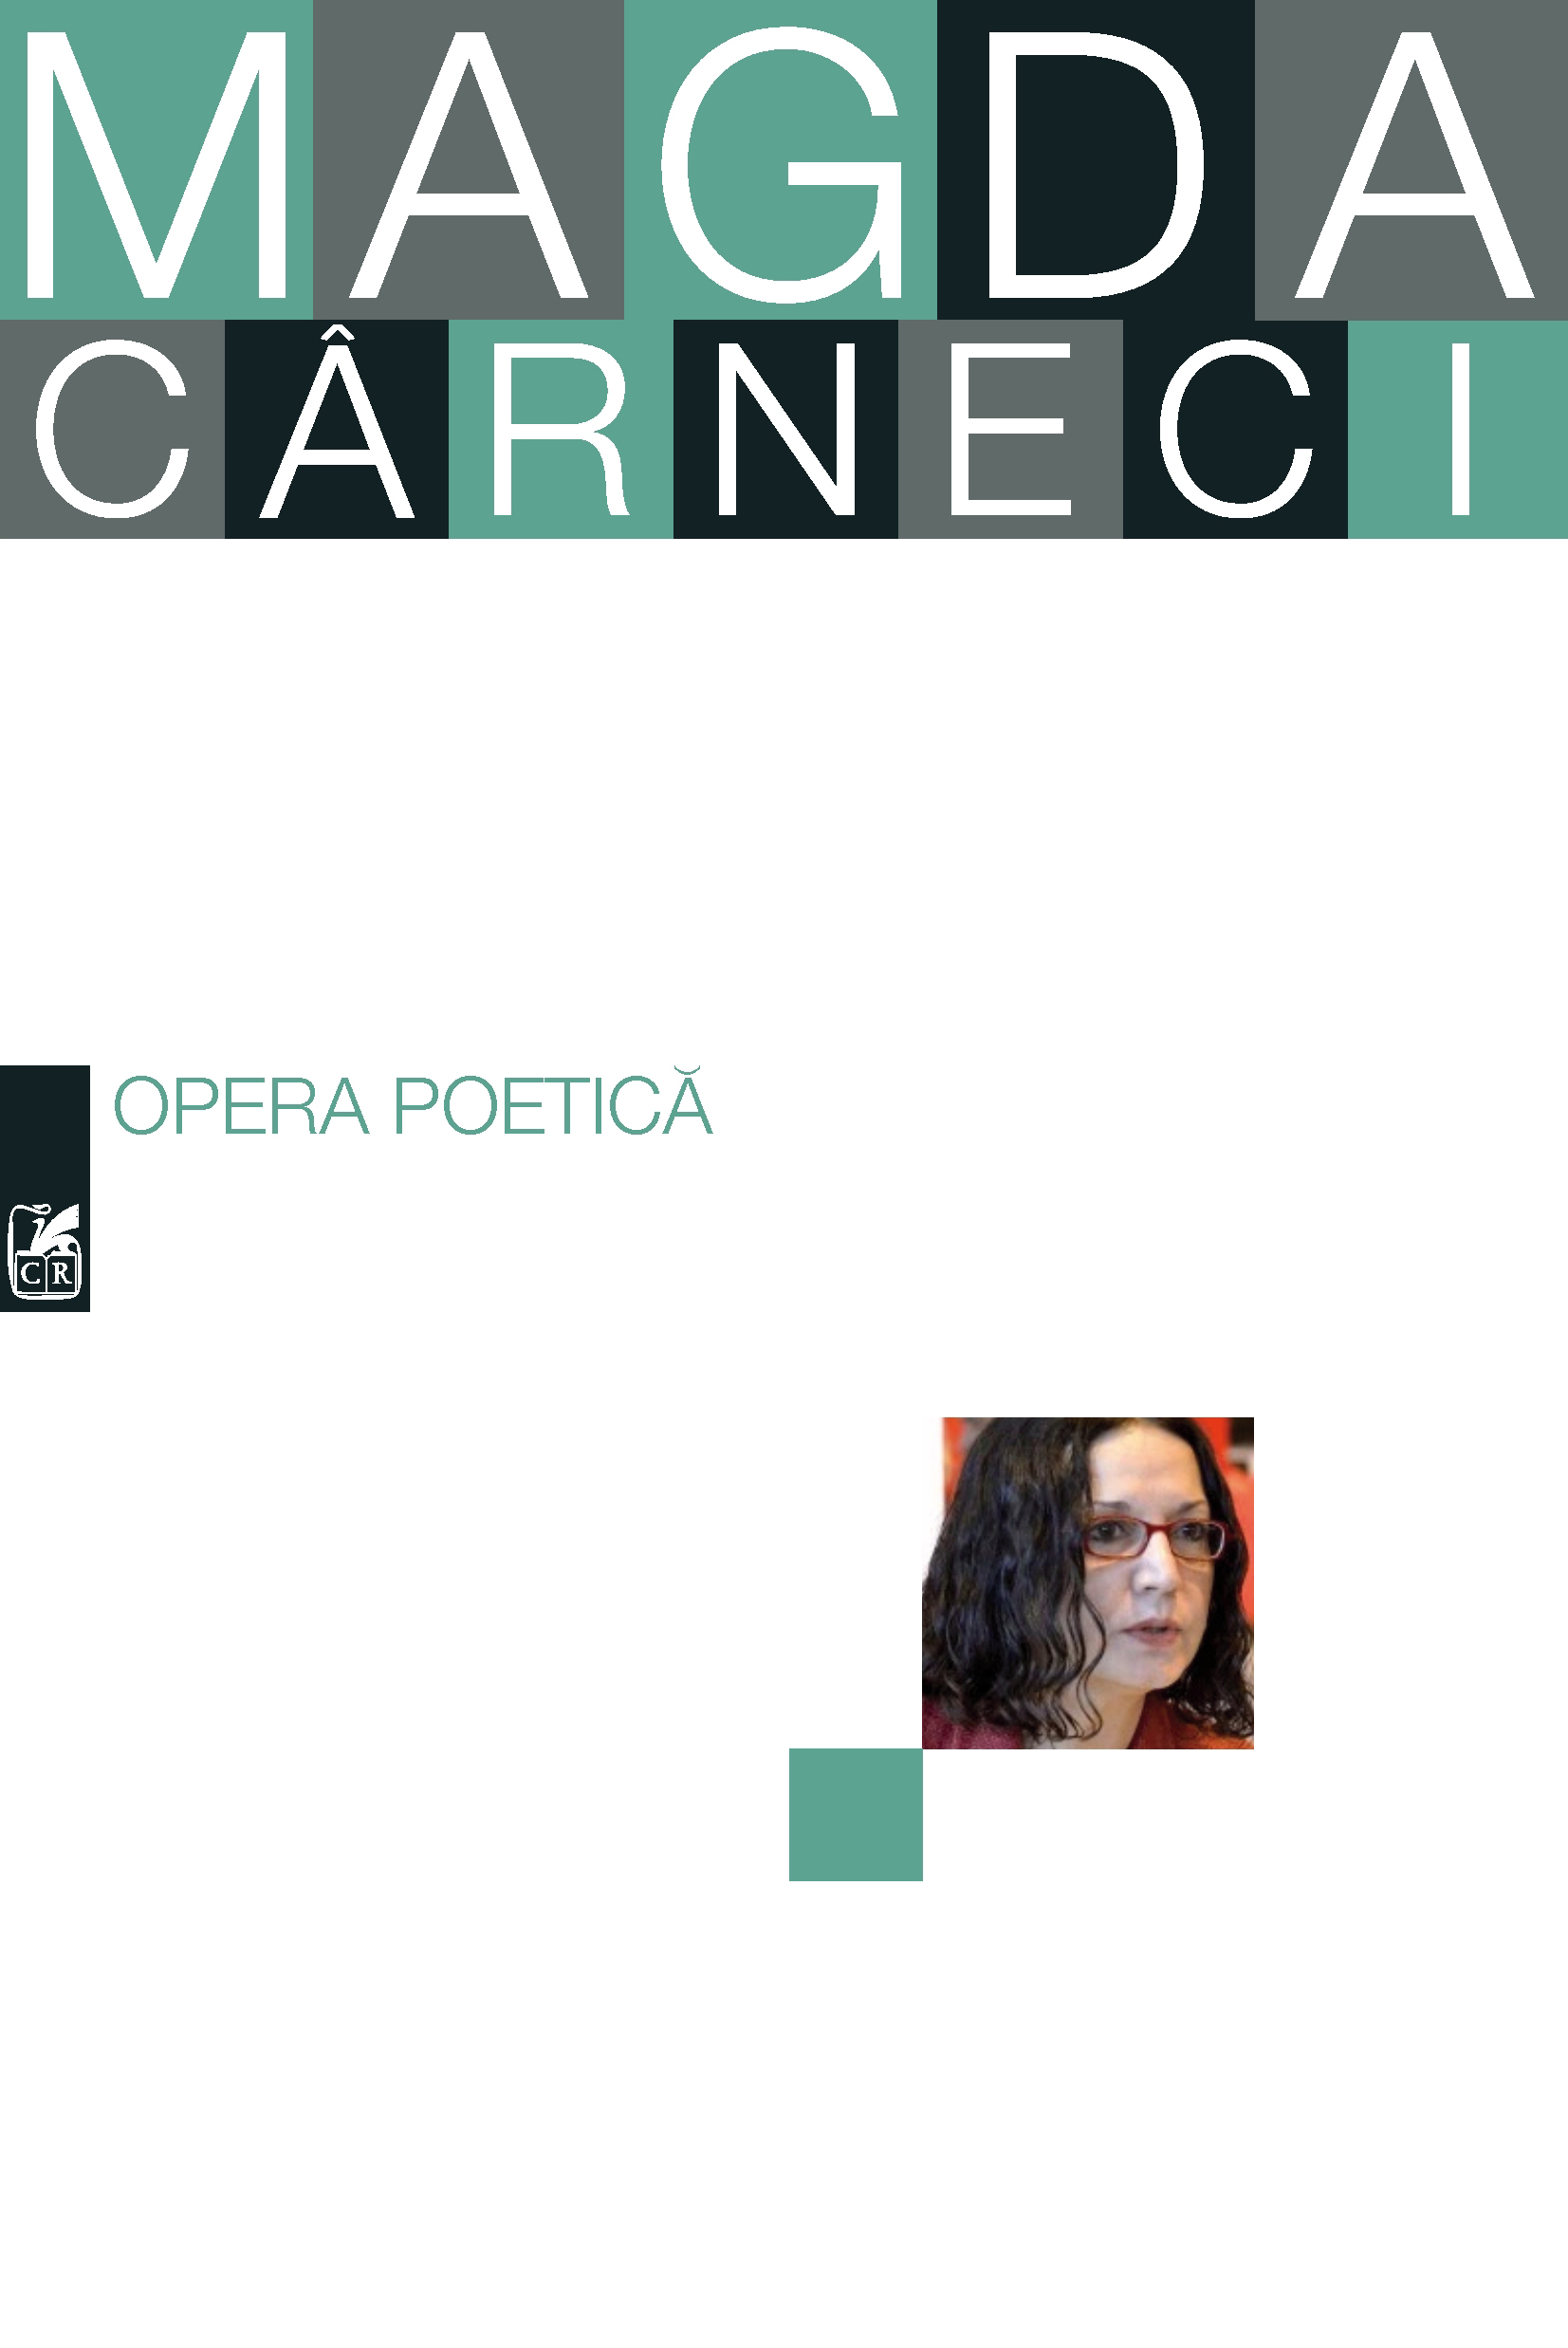 Opera poetica. Magda Carneci